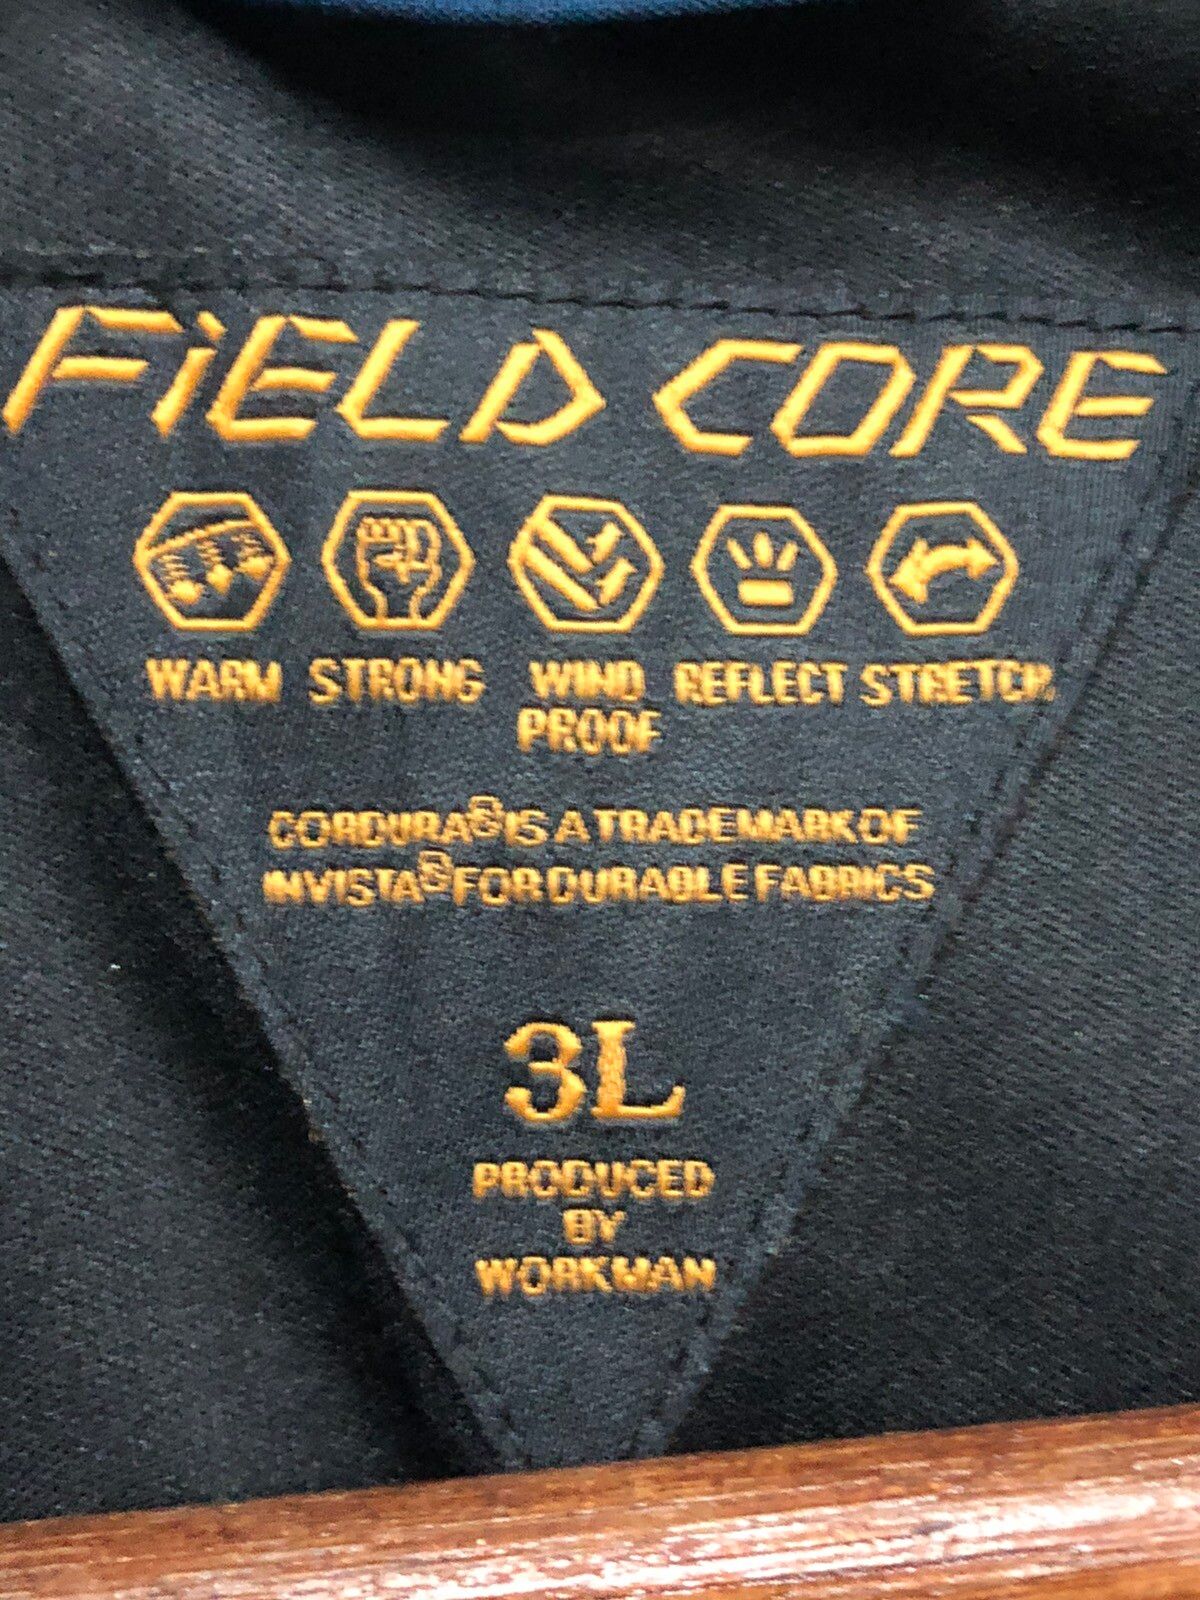 Outdoor Style Go Out! - Fieldcore Cordura Fleece Jacket - 4